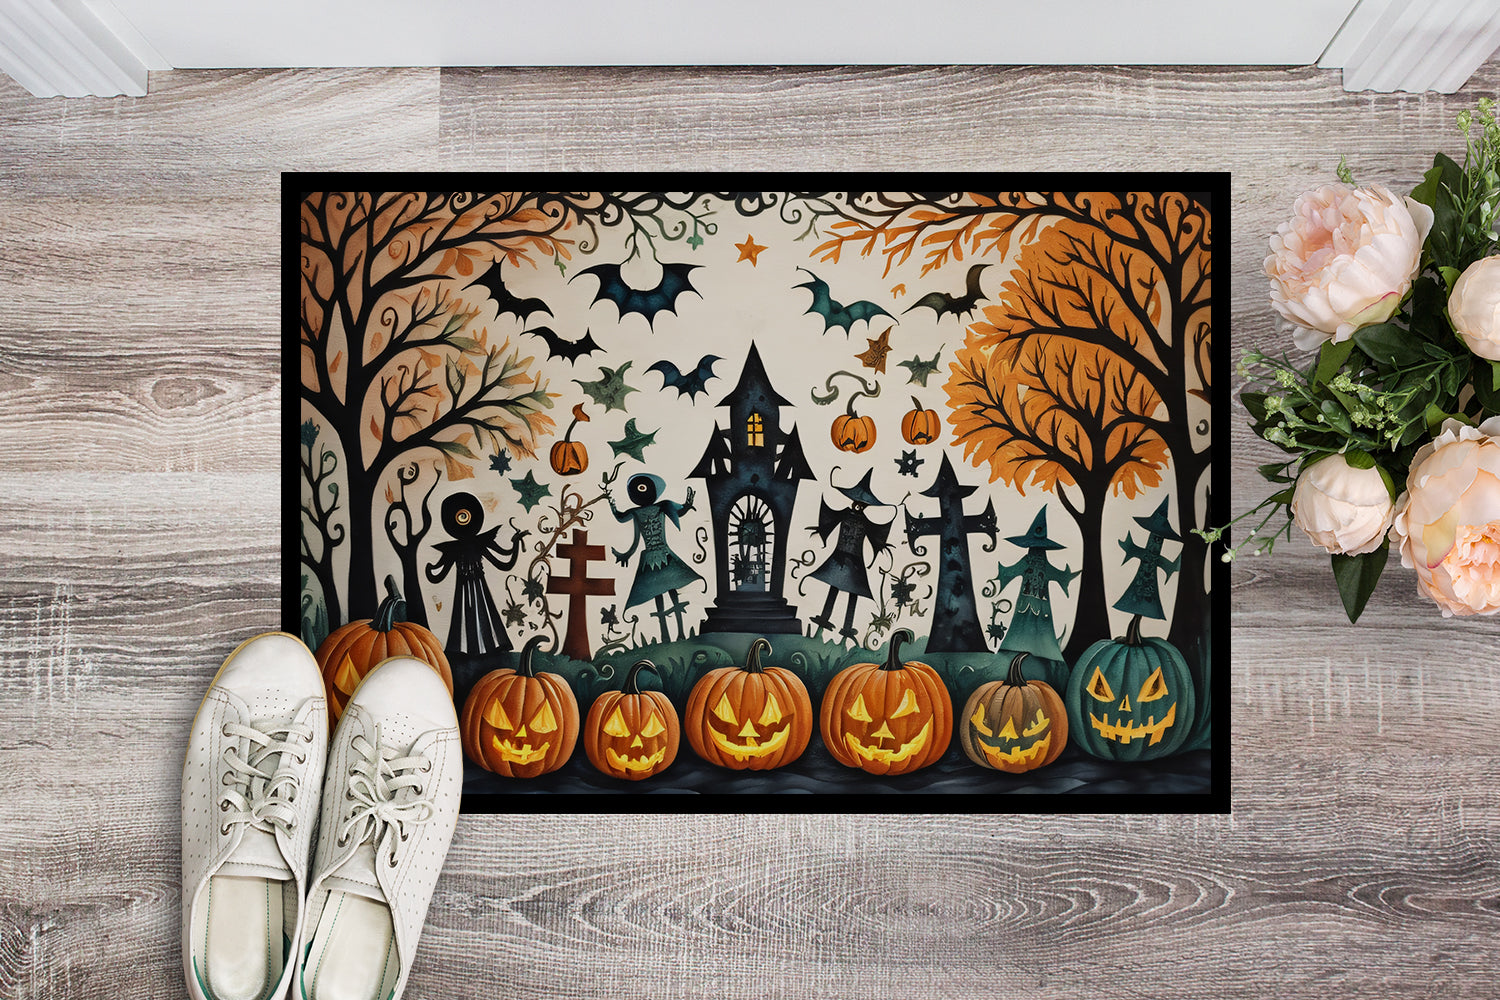 Buy this Papel Picado Skeletons Spooky Halloween Doormat 18x27